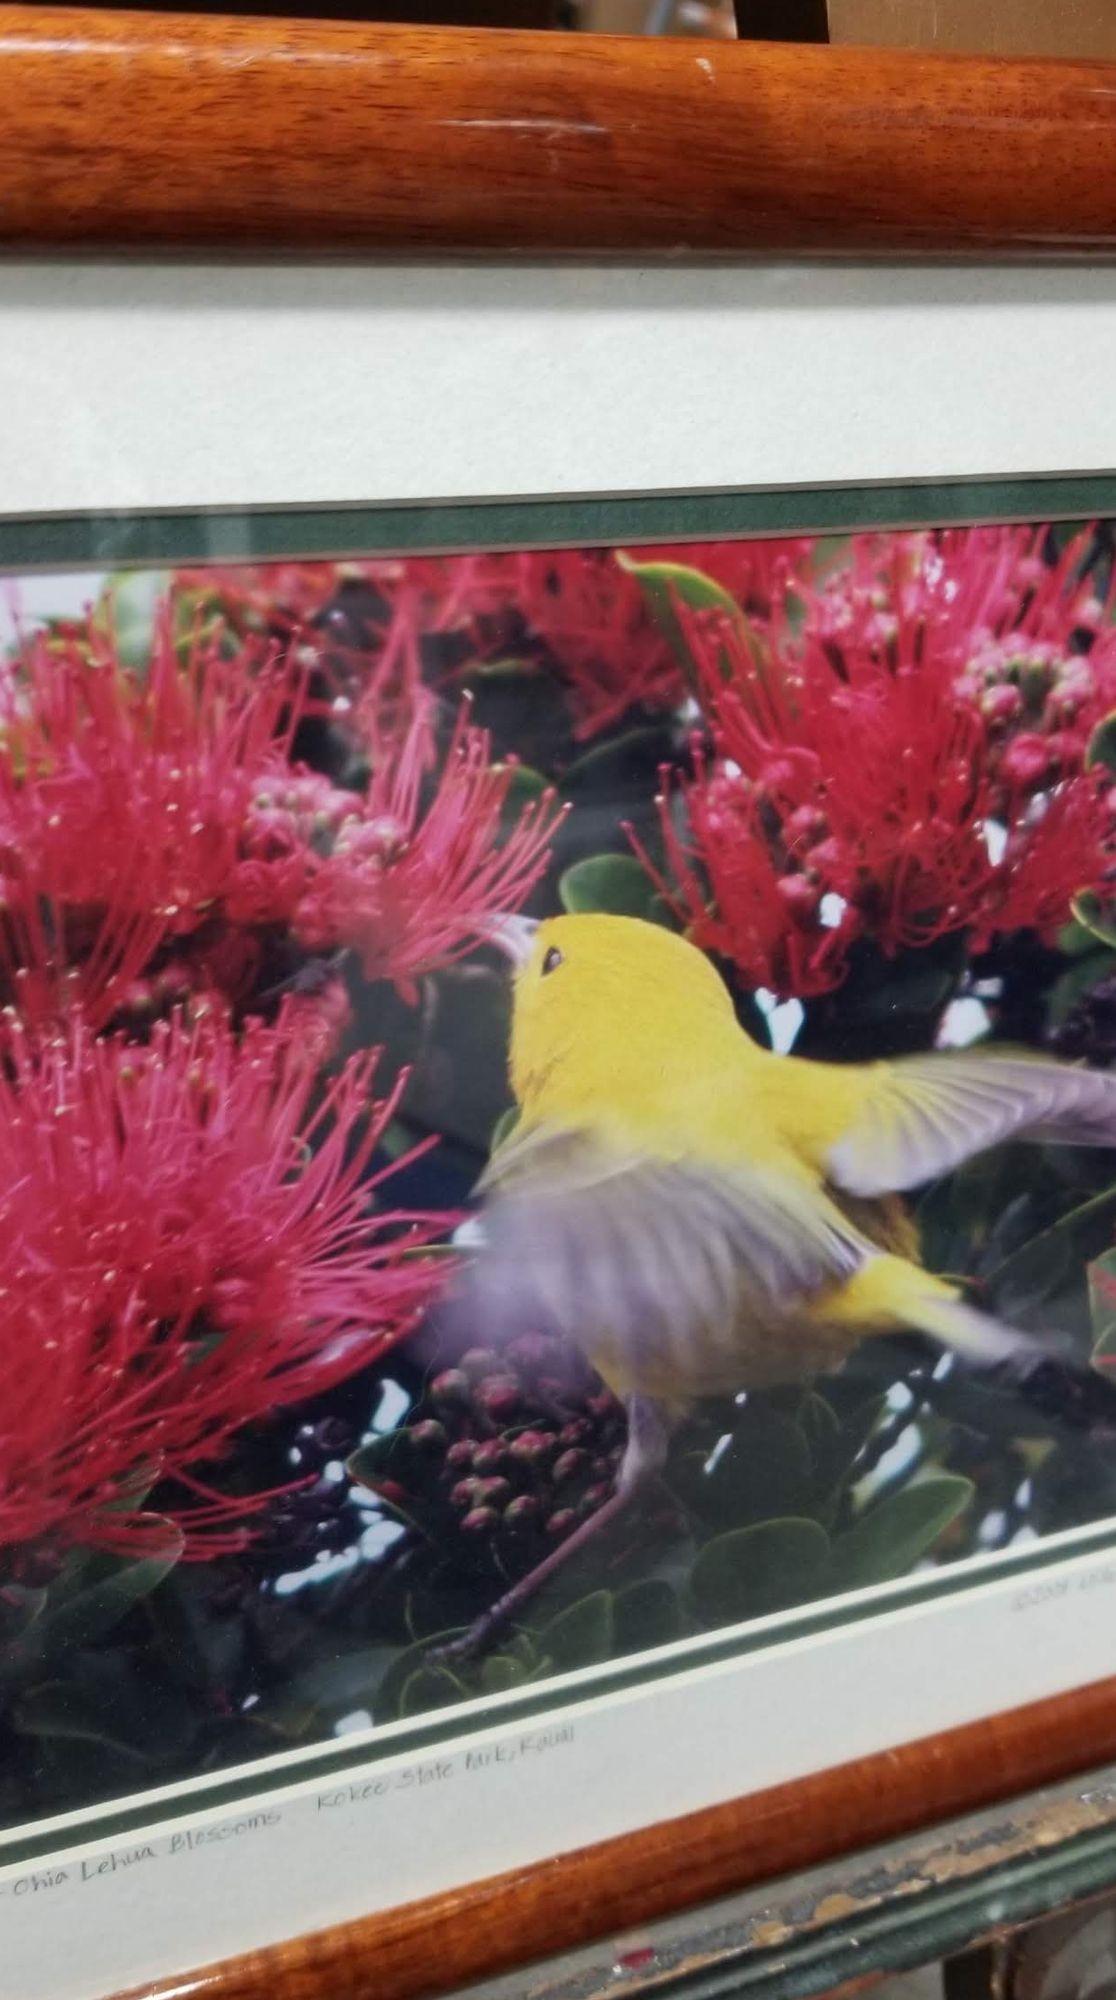 Framed original photography print of a small yellow bird among Hawaiian blossoms framed in a lustrous red Koa Wood frame.

Bottom Reads: Anianiau Ohia Lehua Blossoms. Kokee State Park, Kauai

The ʻanianiau (Magumma parva) is a Hawaiian bird species